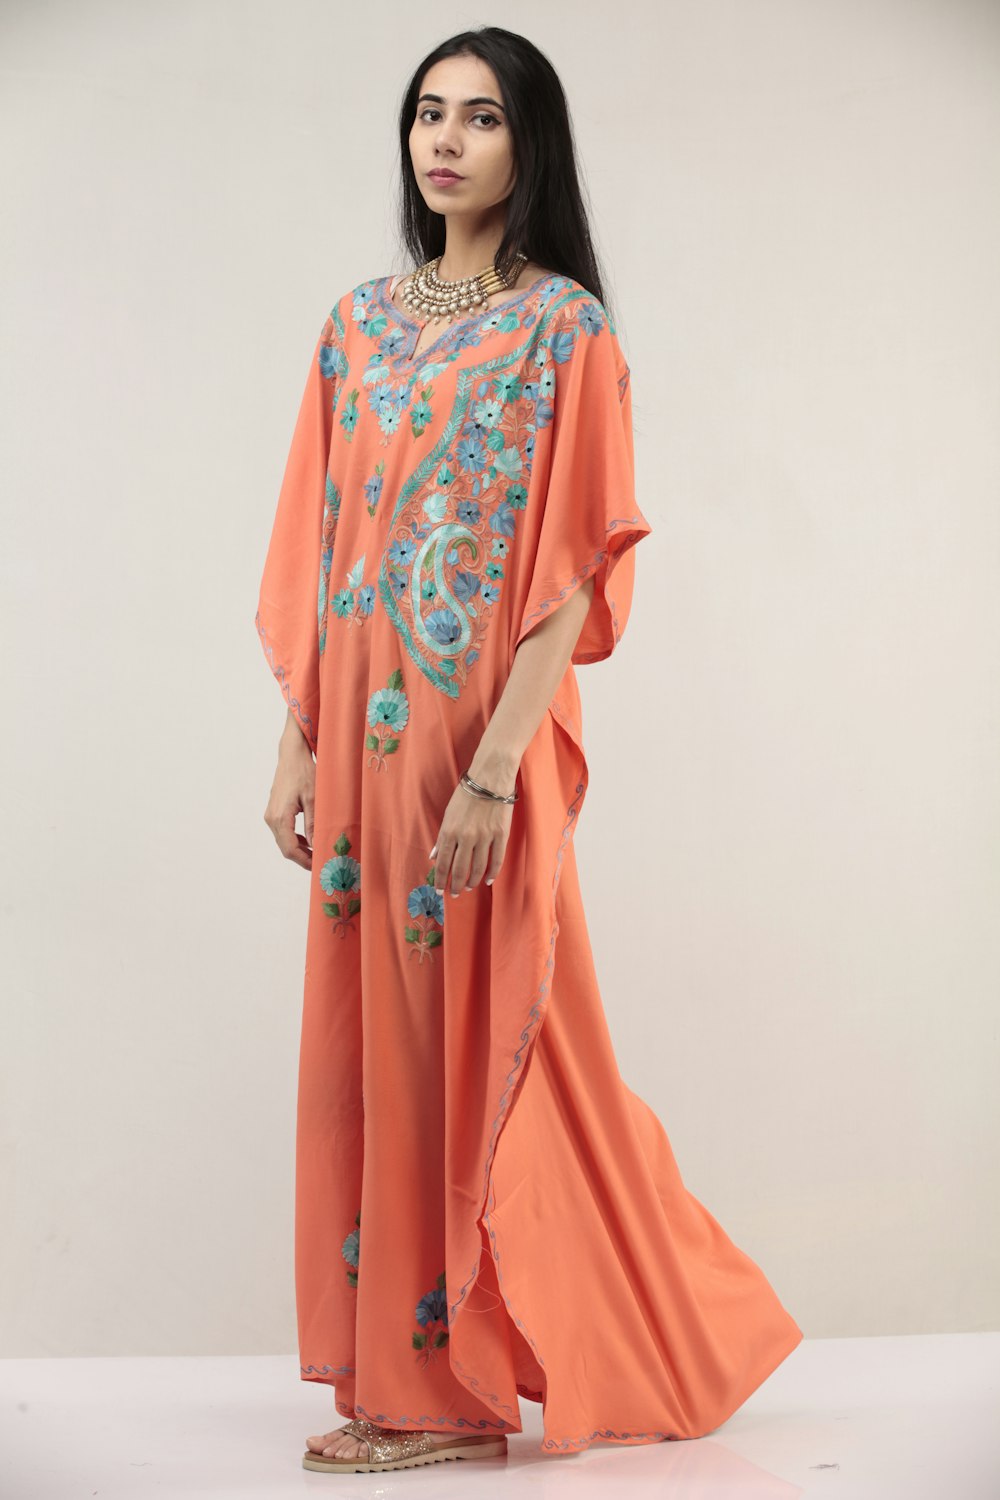 Frau in orange-weißem Sari